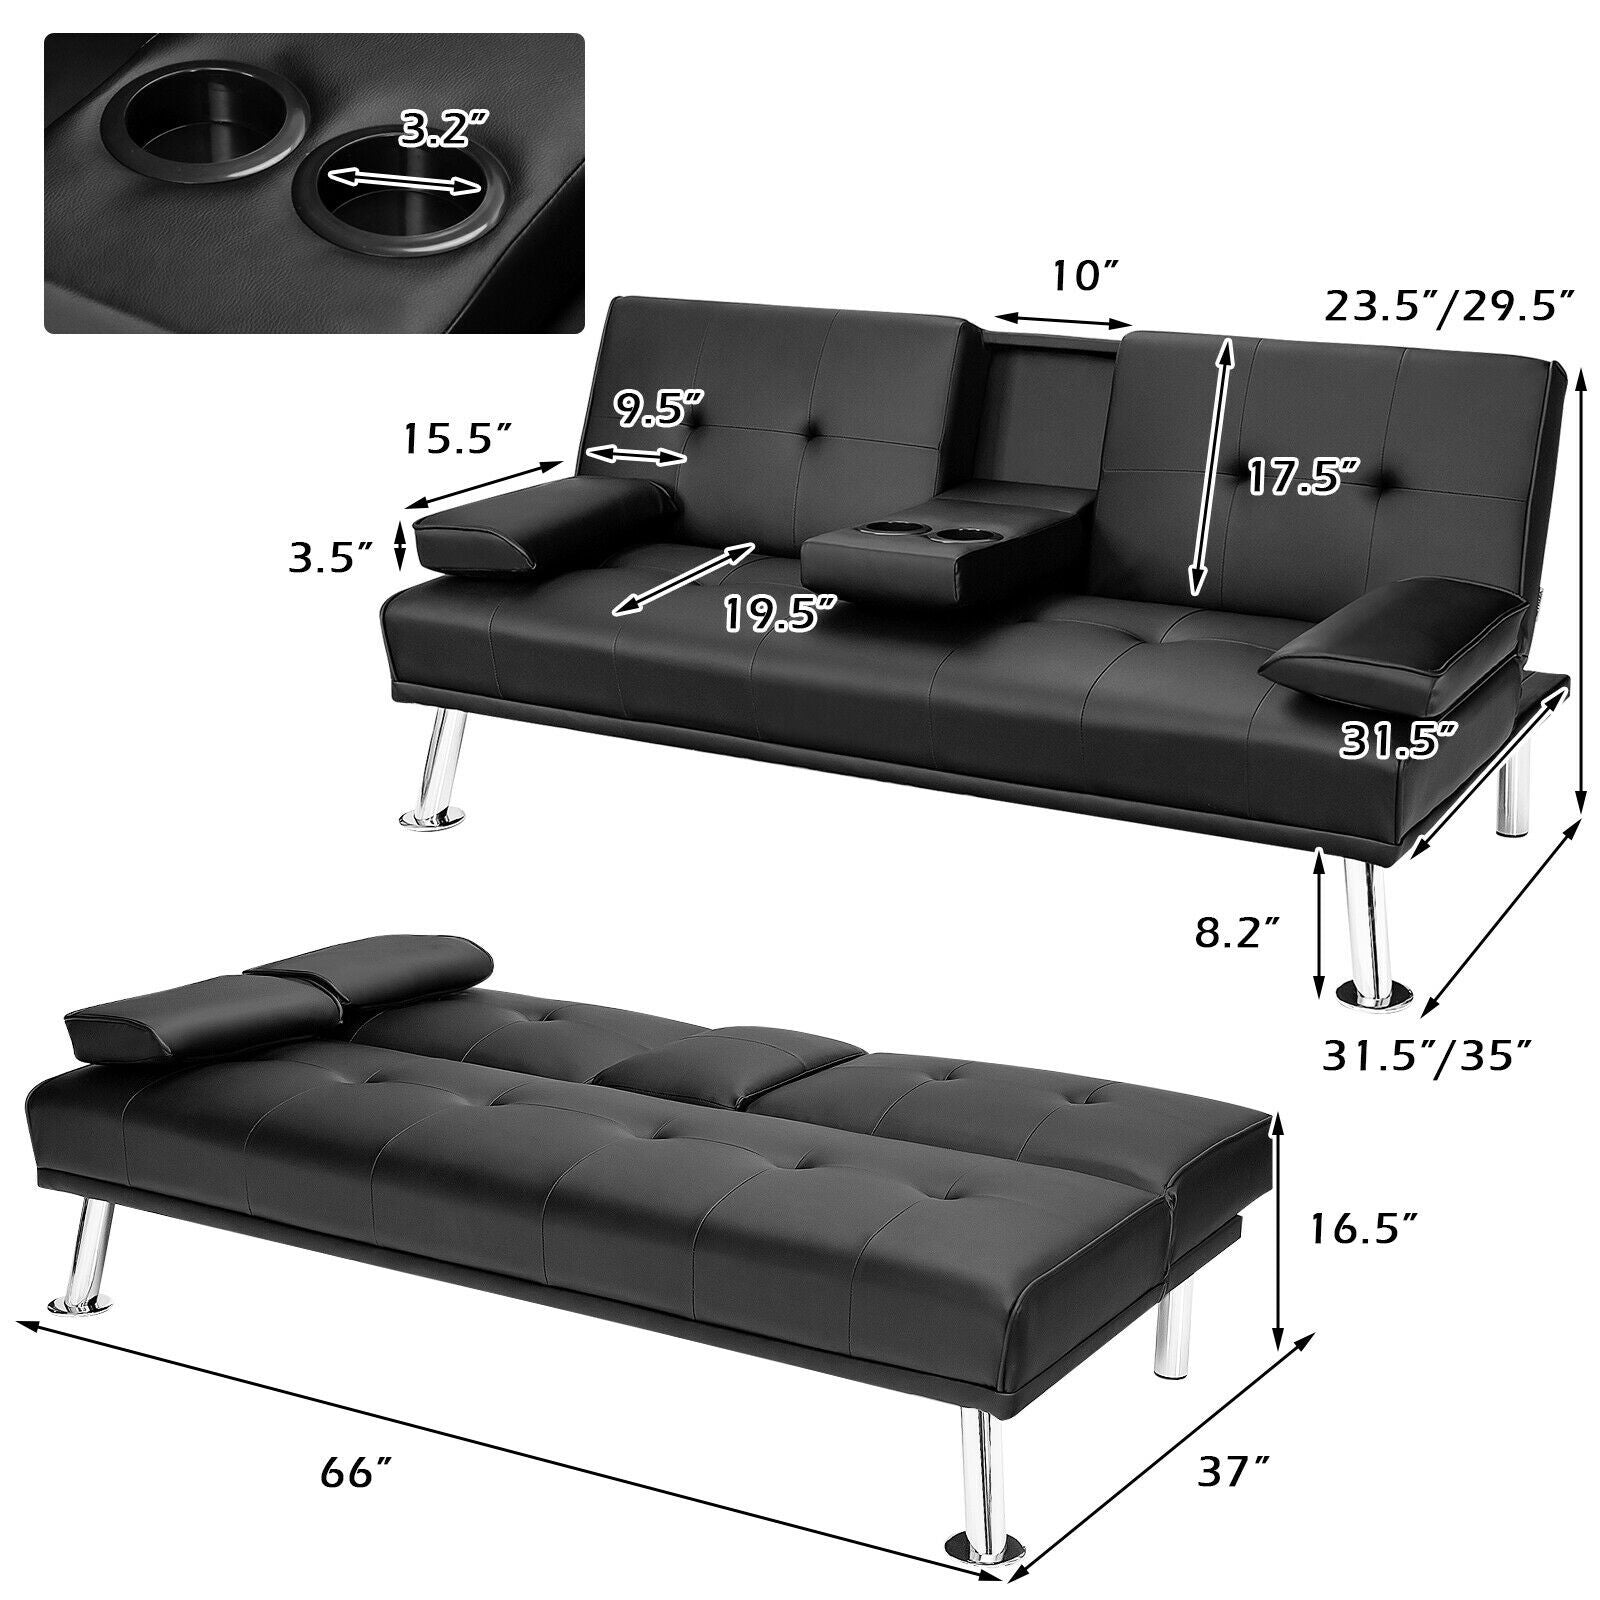 Giantex Modern Convertible Futon Sofa Bed,2 Cup Holders, Backrest Adjustable